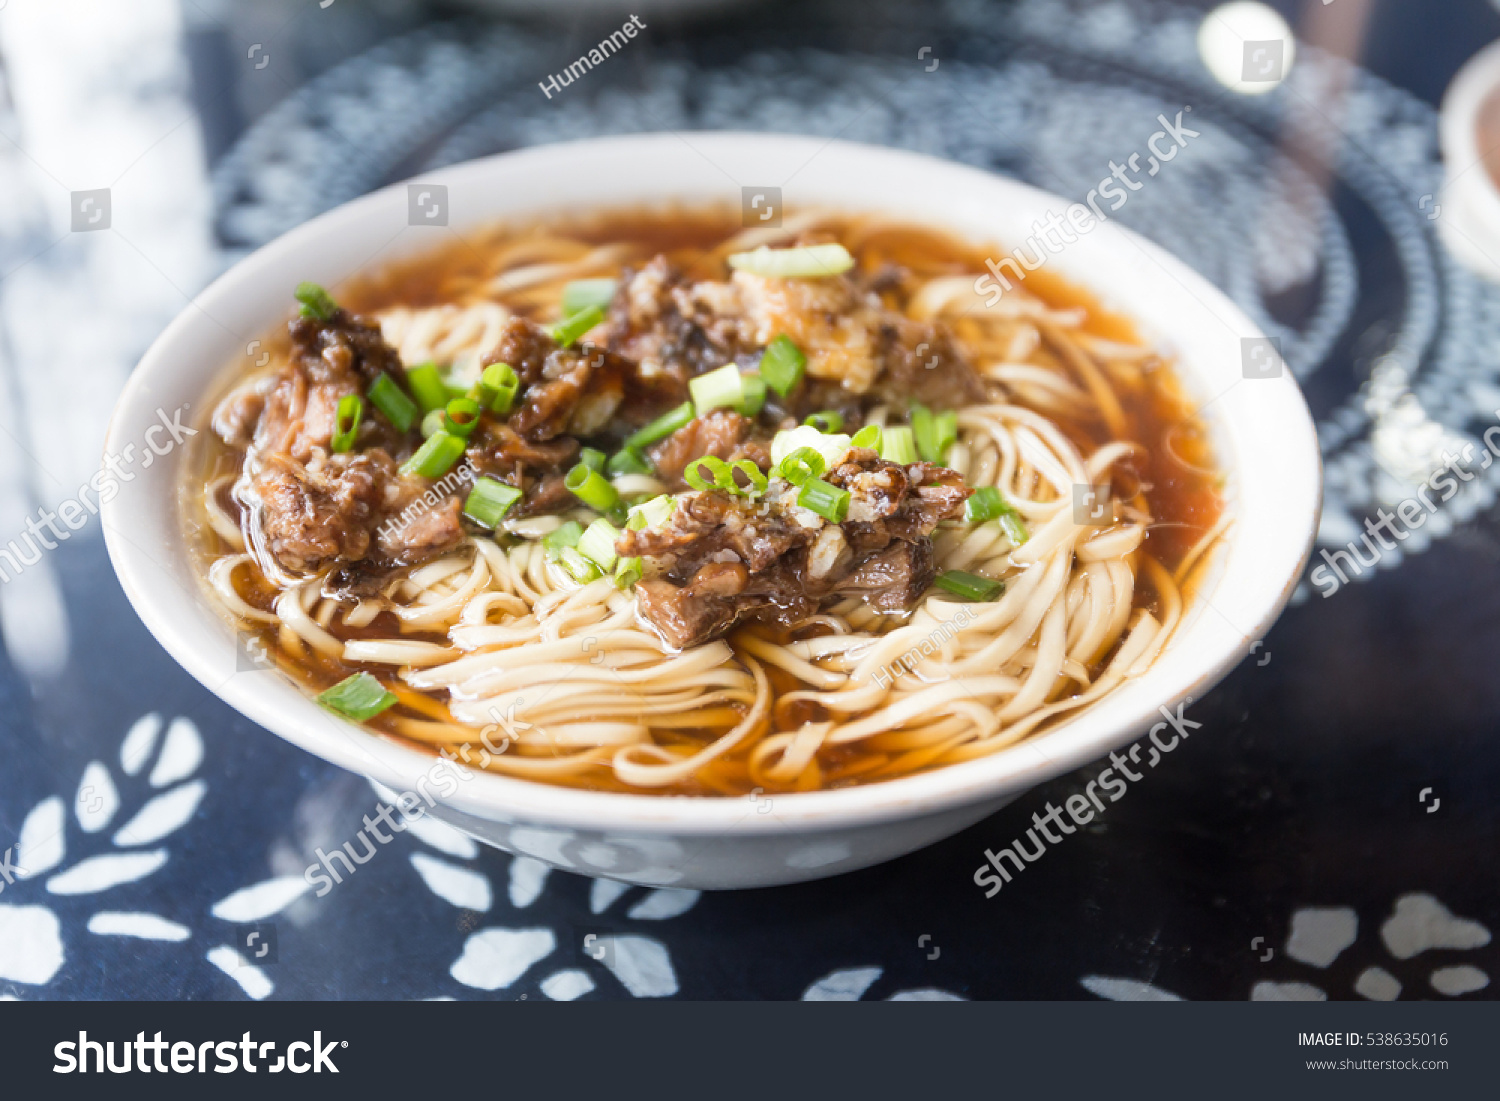  Ciotola in melamina antiscivolo isolamento termico Rice Ramen noodles zuppiera ristorante stoviglie forniture 1 Collectsound Ramen noodles  